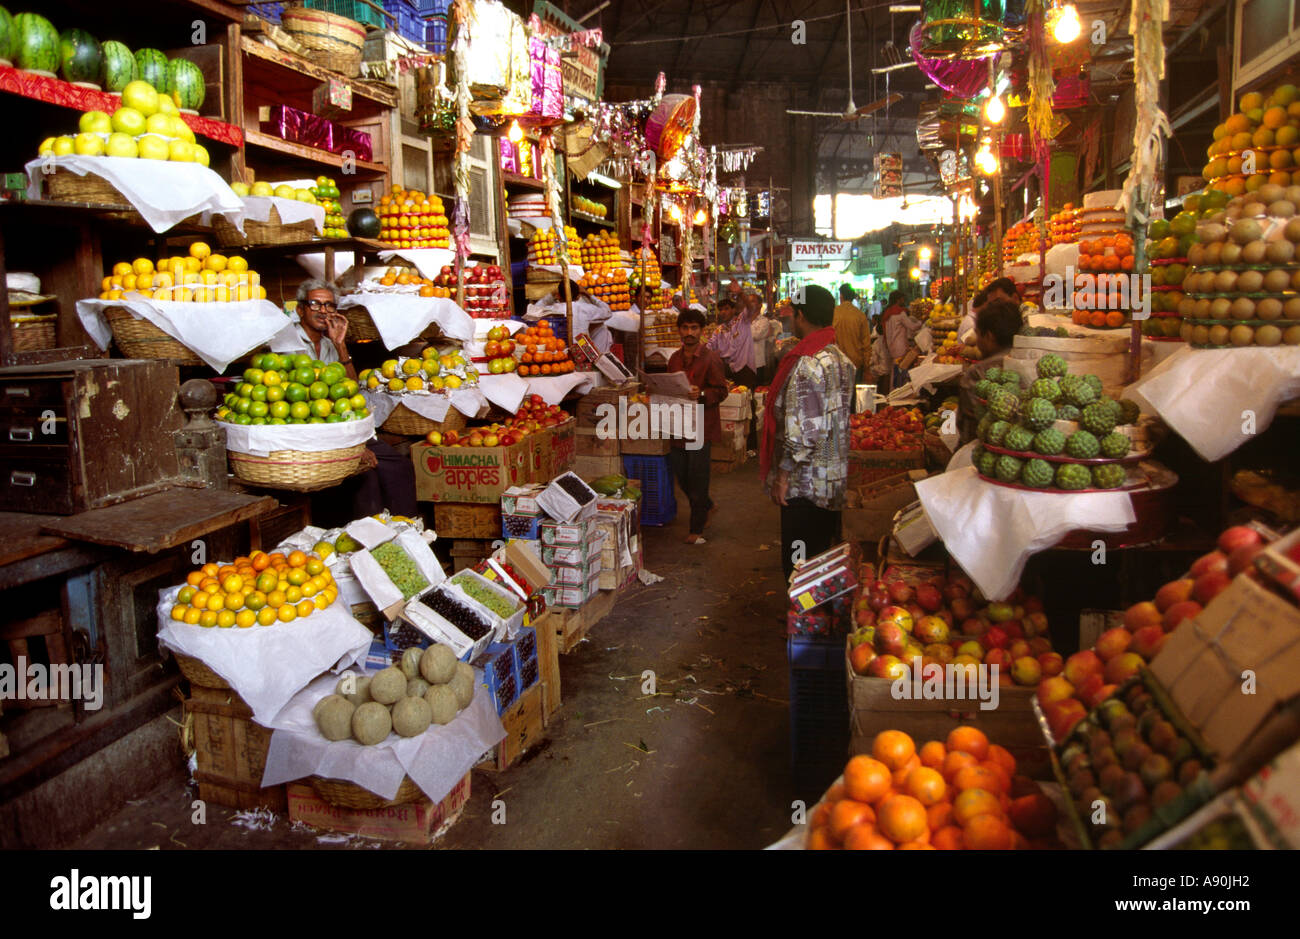 Indien-Maharashtra-Mumbai-Bombay-Crawford-Markt Obst Essensstände Stockfoto